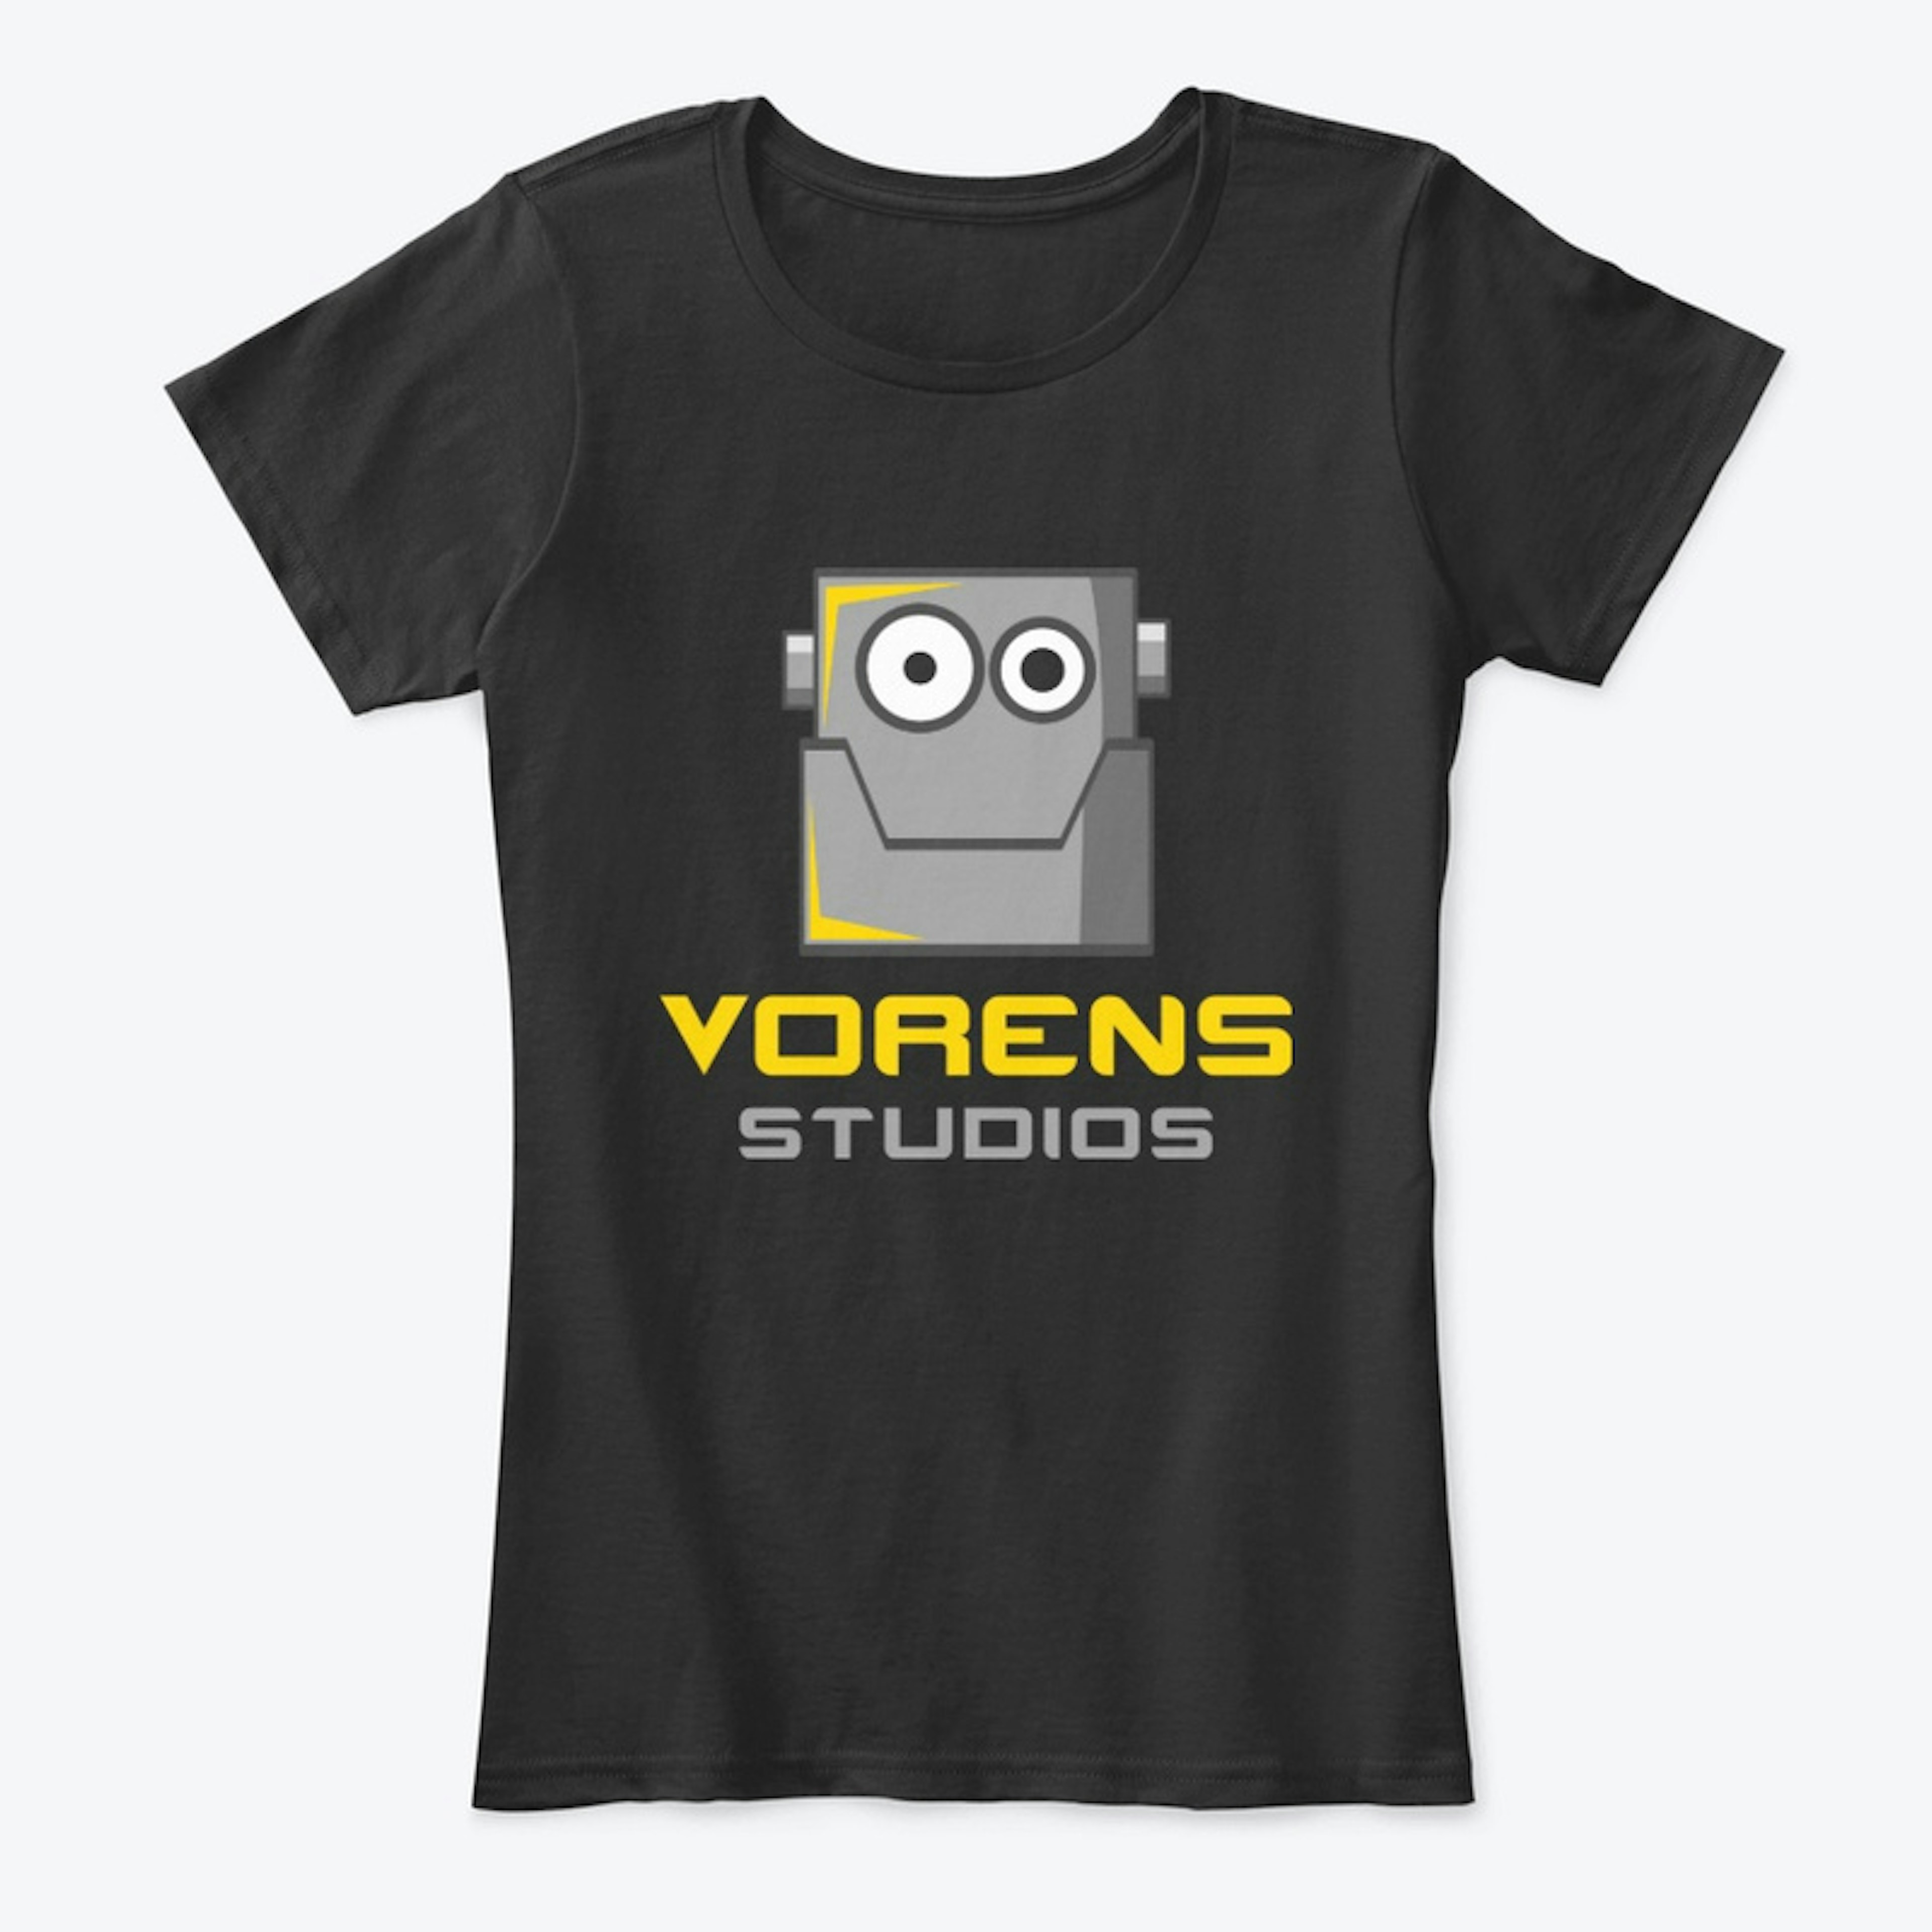 Design I - Vorens Studios